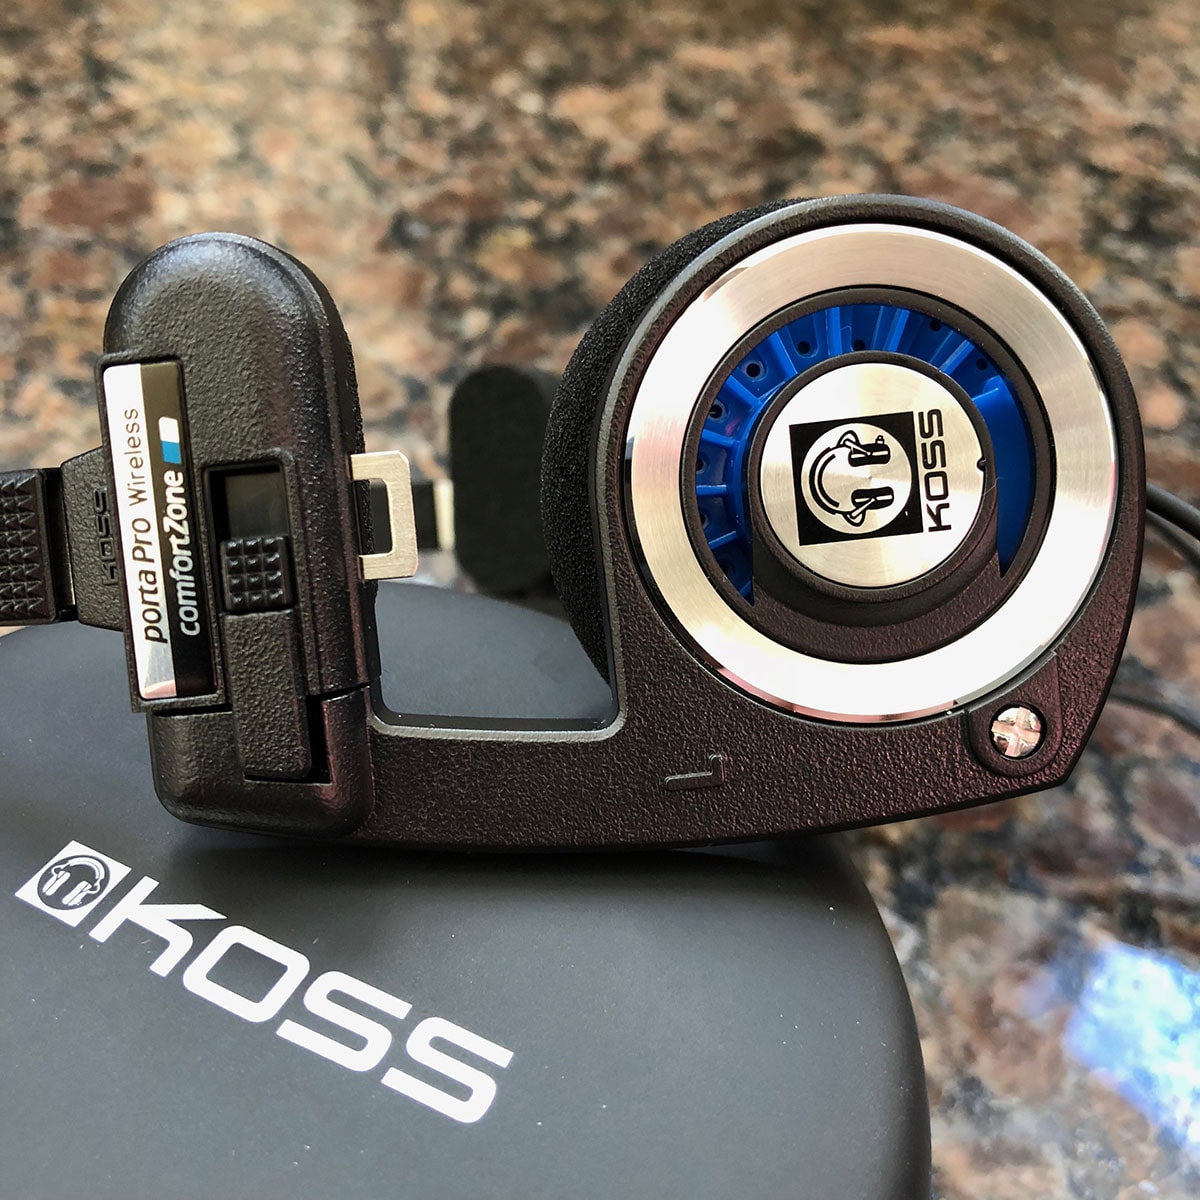 Koss PortaPro - Headphones ( semi-open ) - Reviews